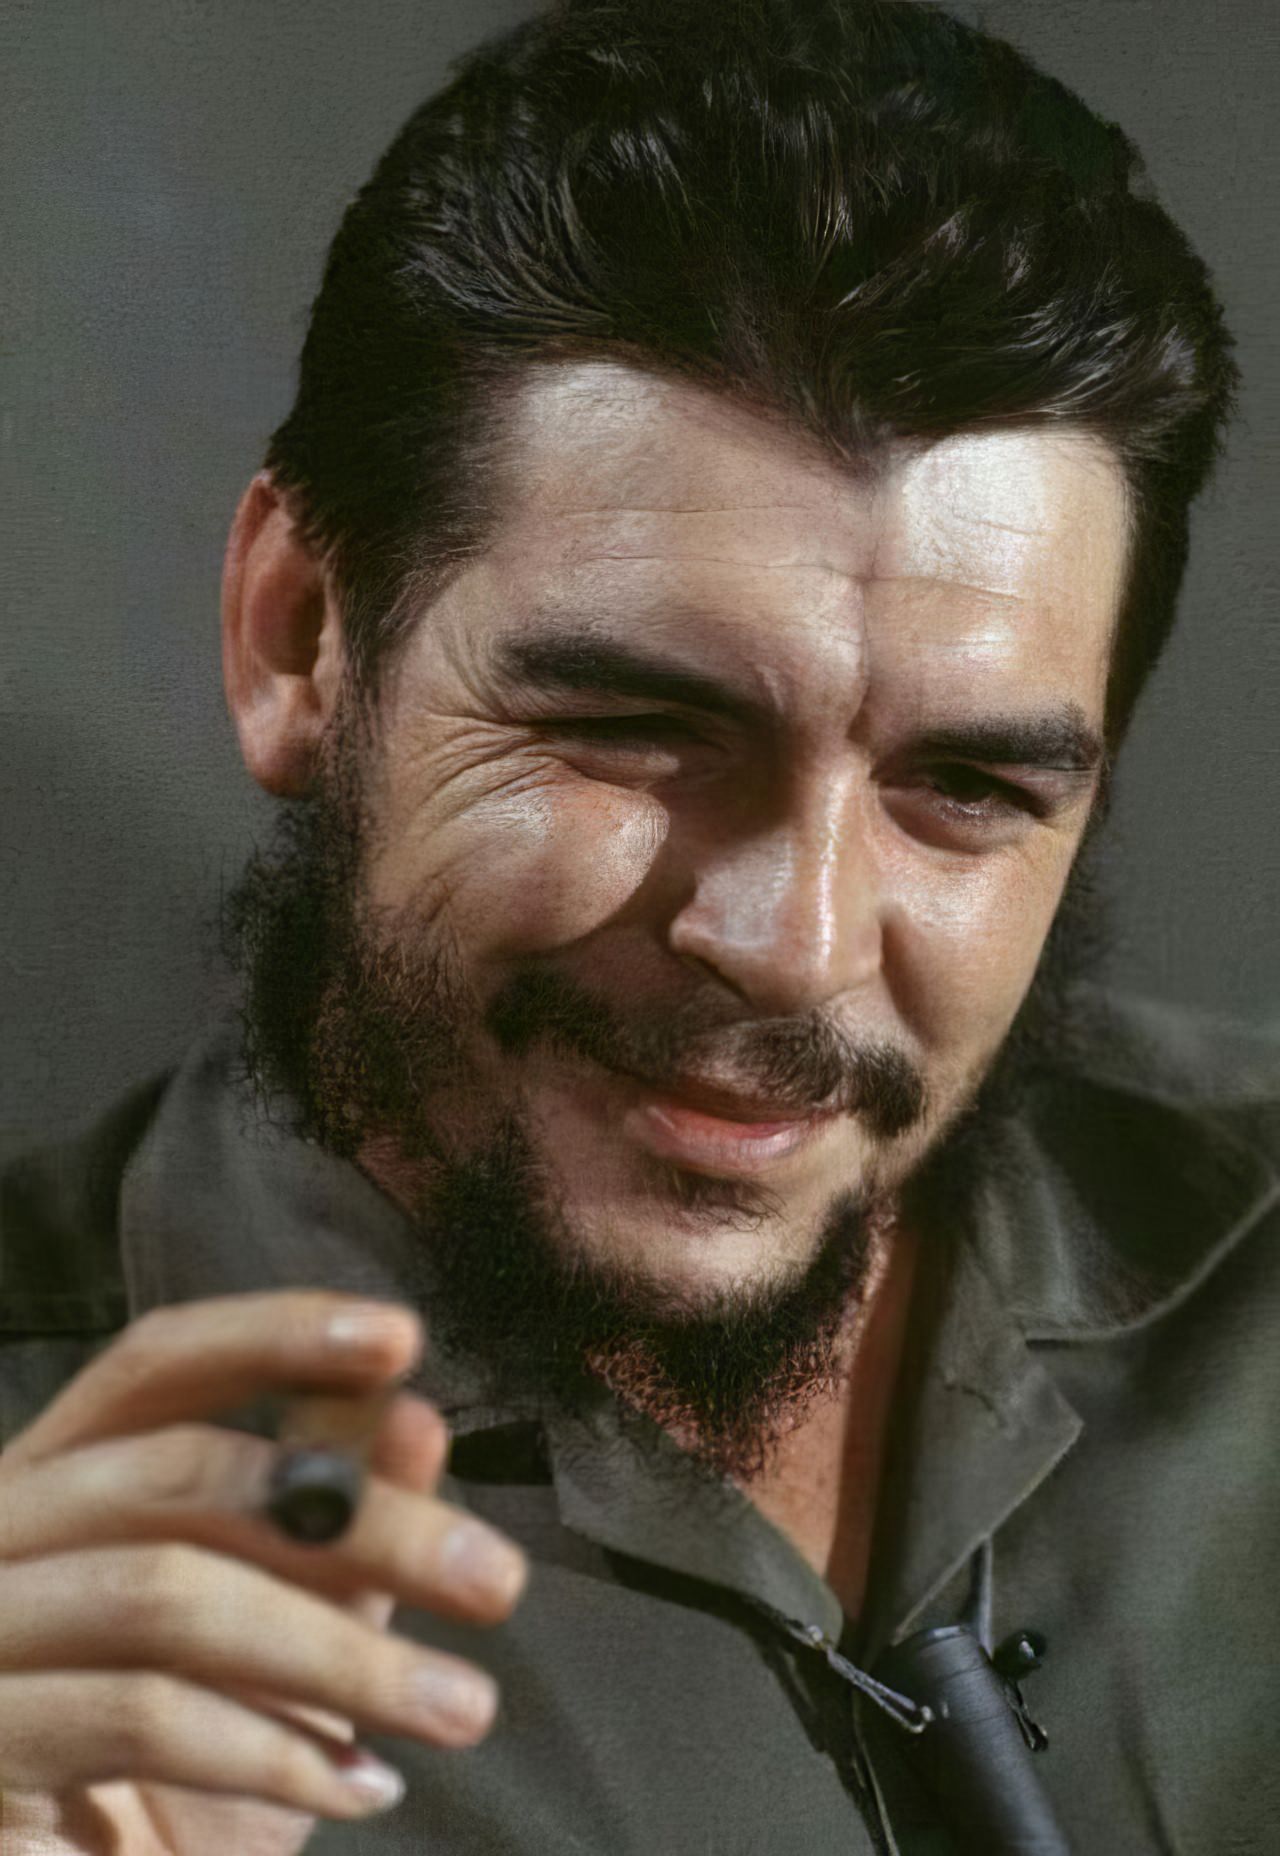 Capturing a Revolutionary: Elliott Erwitt's 1964 Portraits of Che Guevara